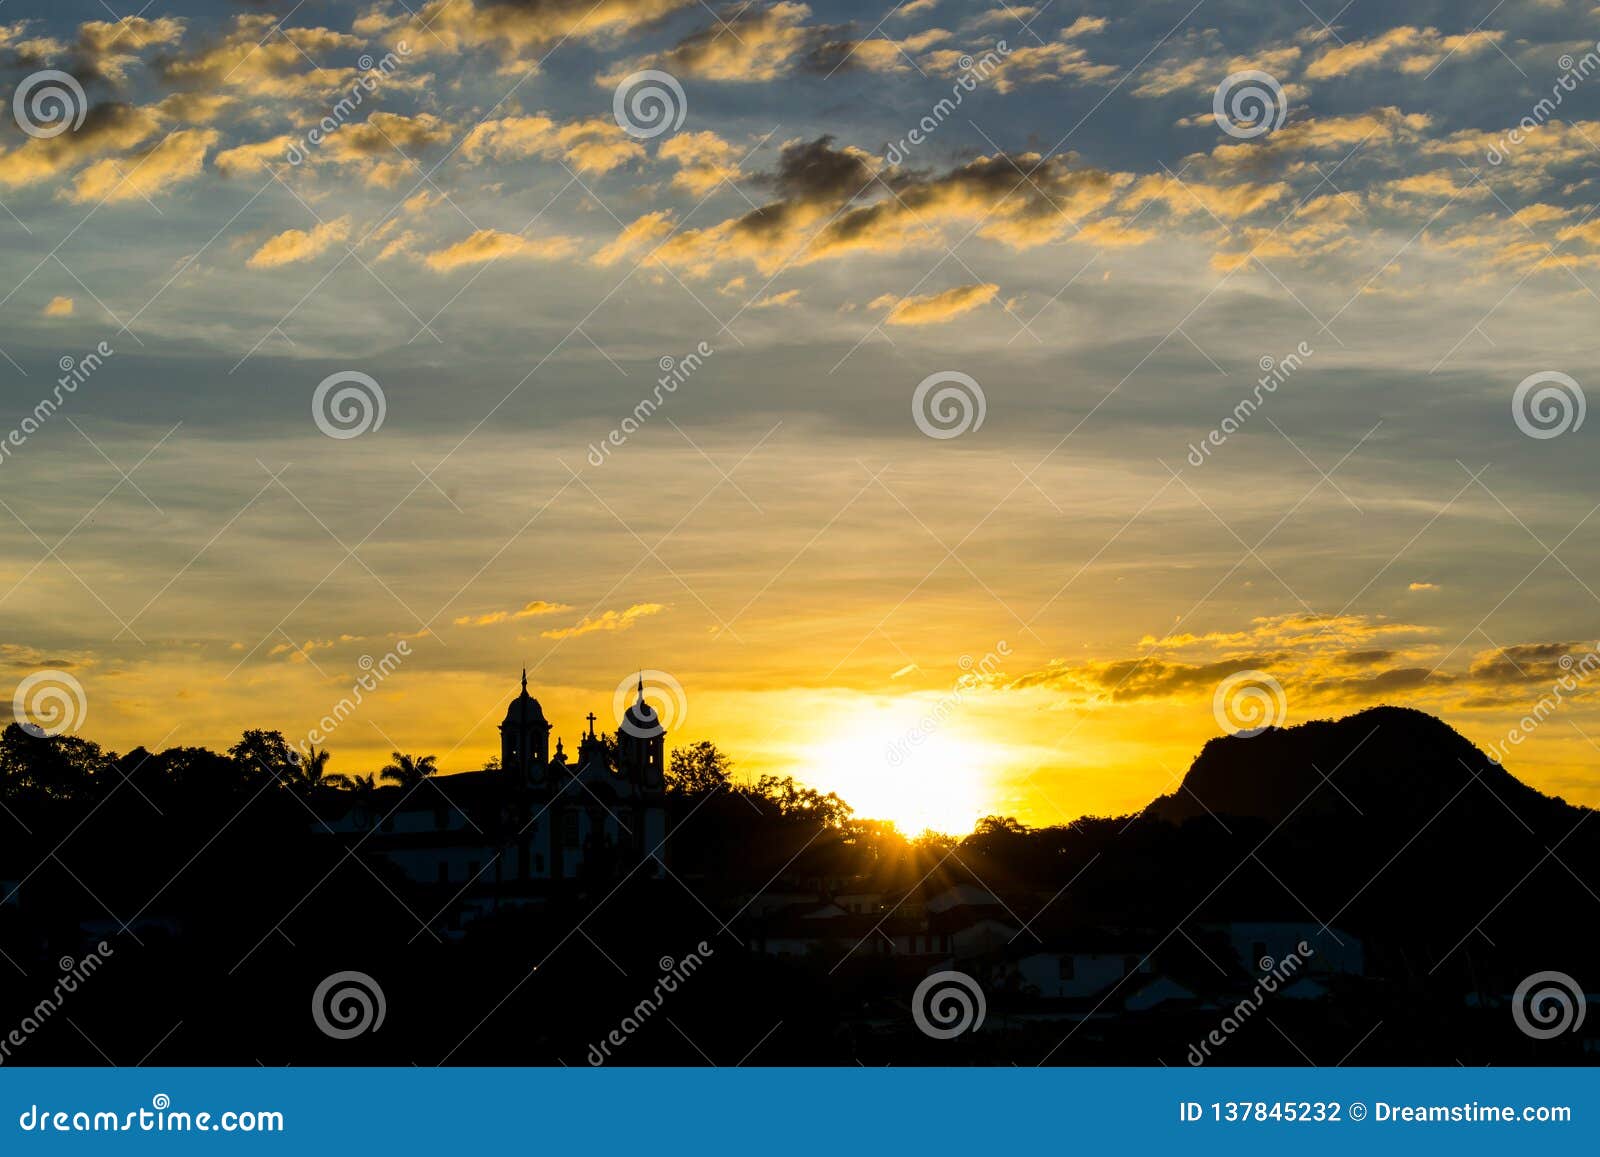 sunset overlooking the church of tiradentes